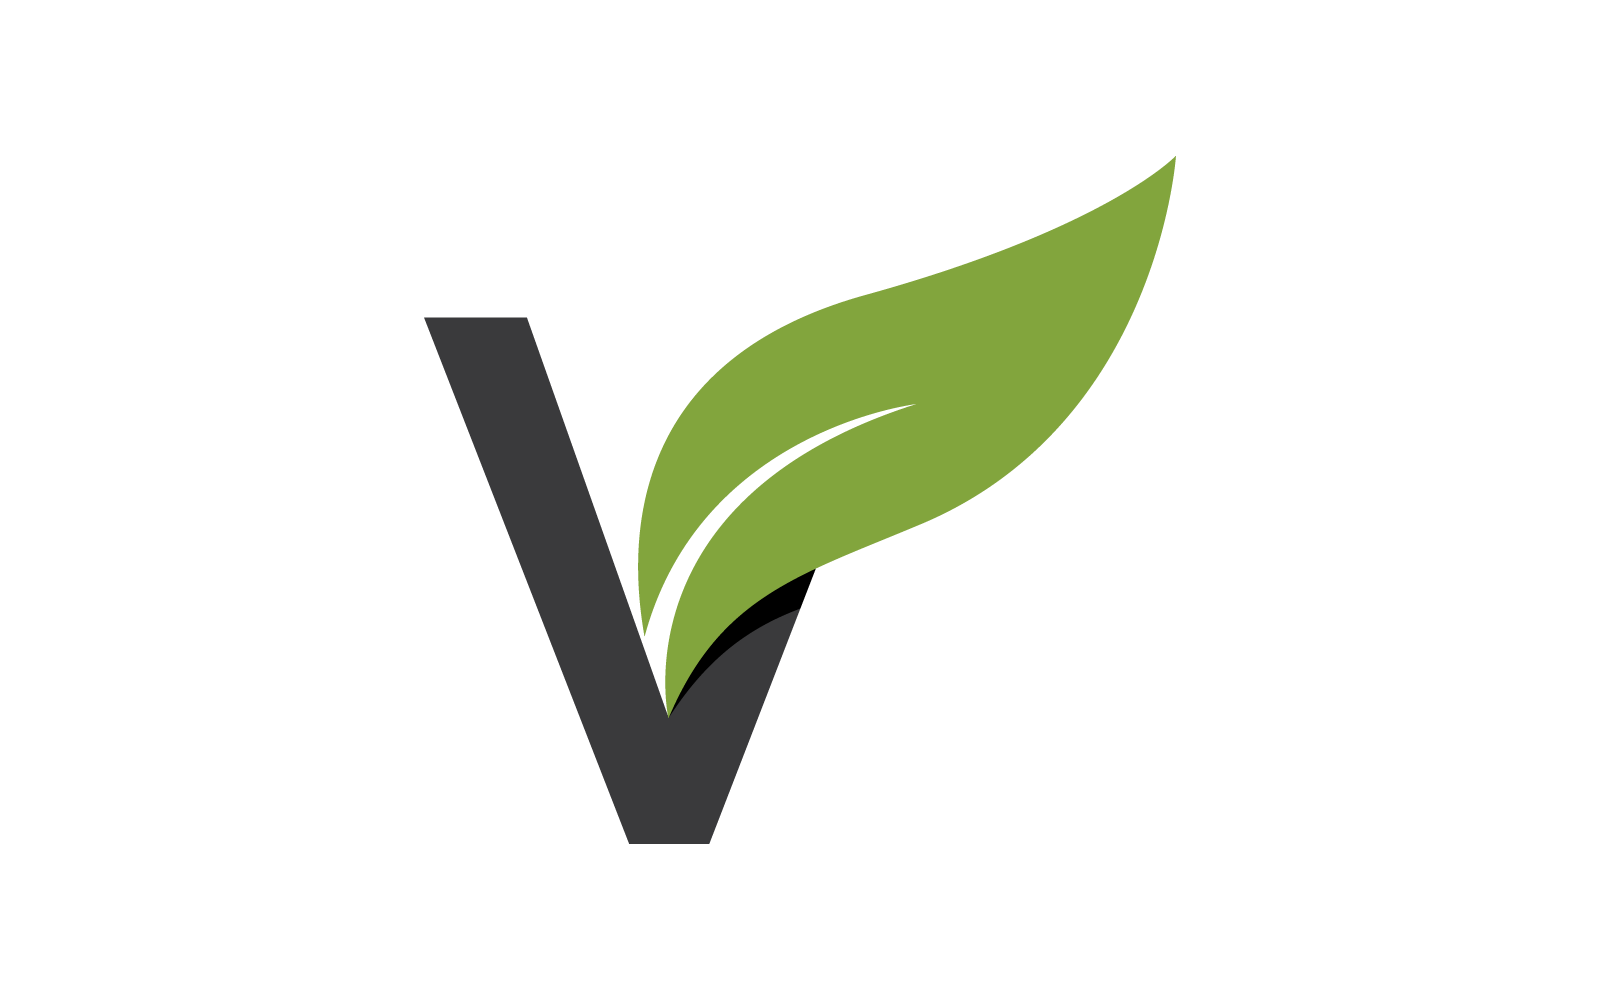 V Initial letter with green leaf logo vector flat design Logo Template